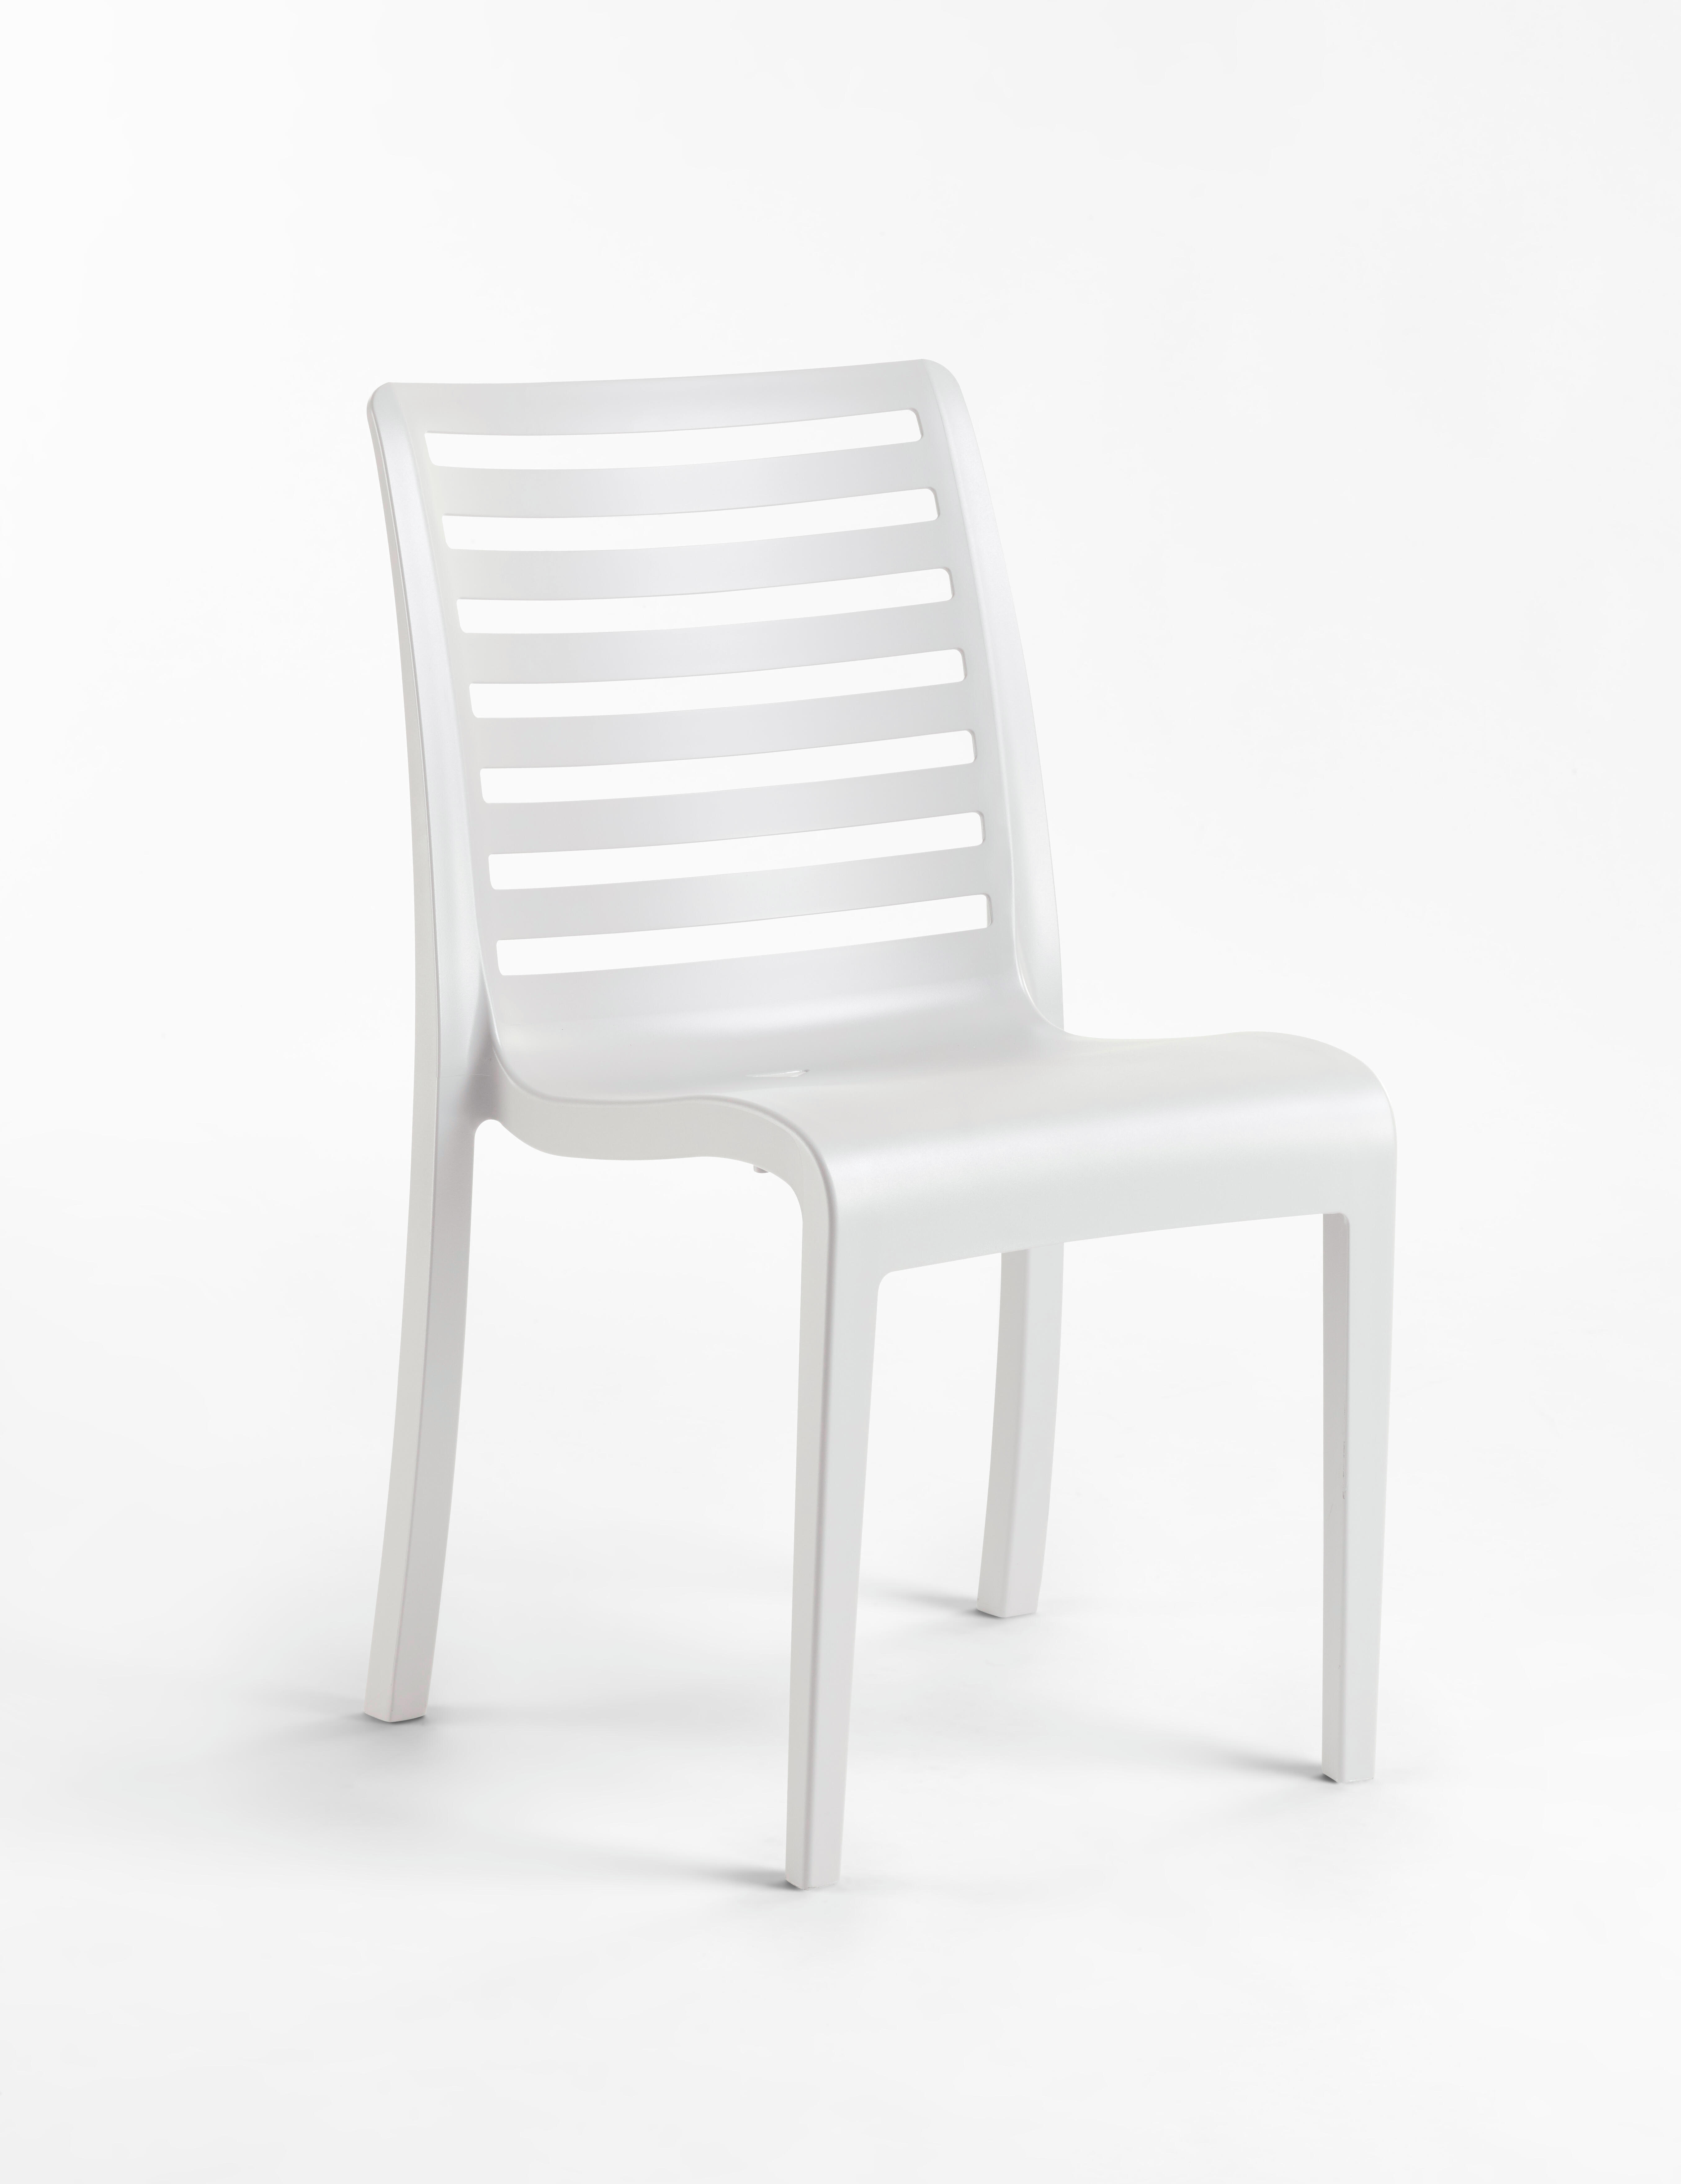 Silla de jardín sin cojín de resina inyectada, polipropileno slat silla blanco